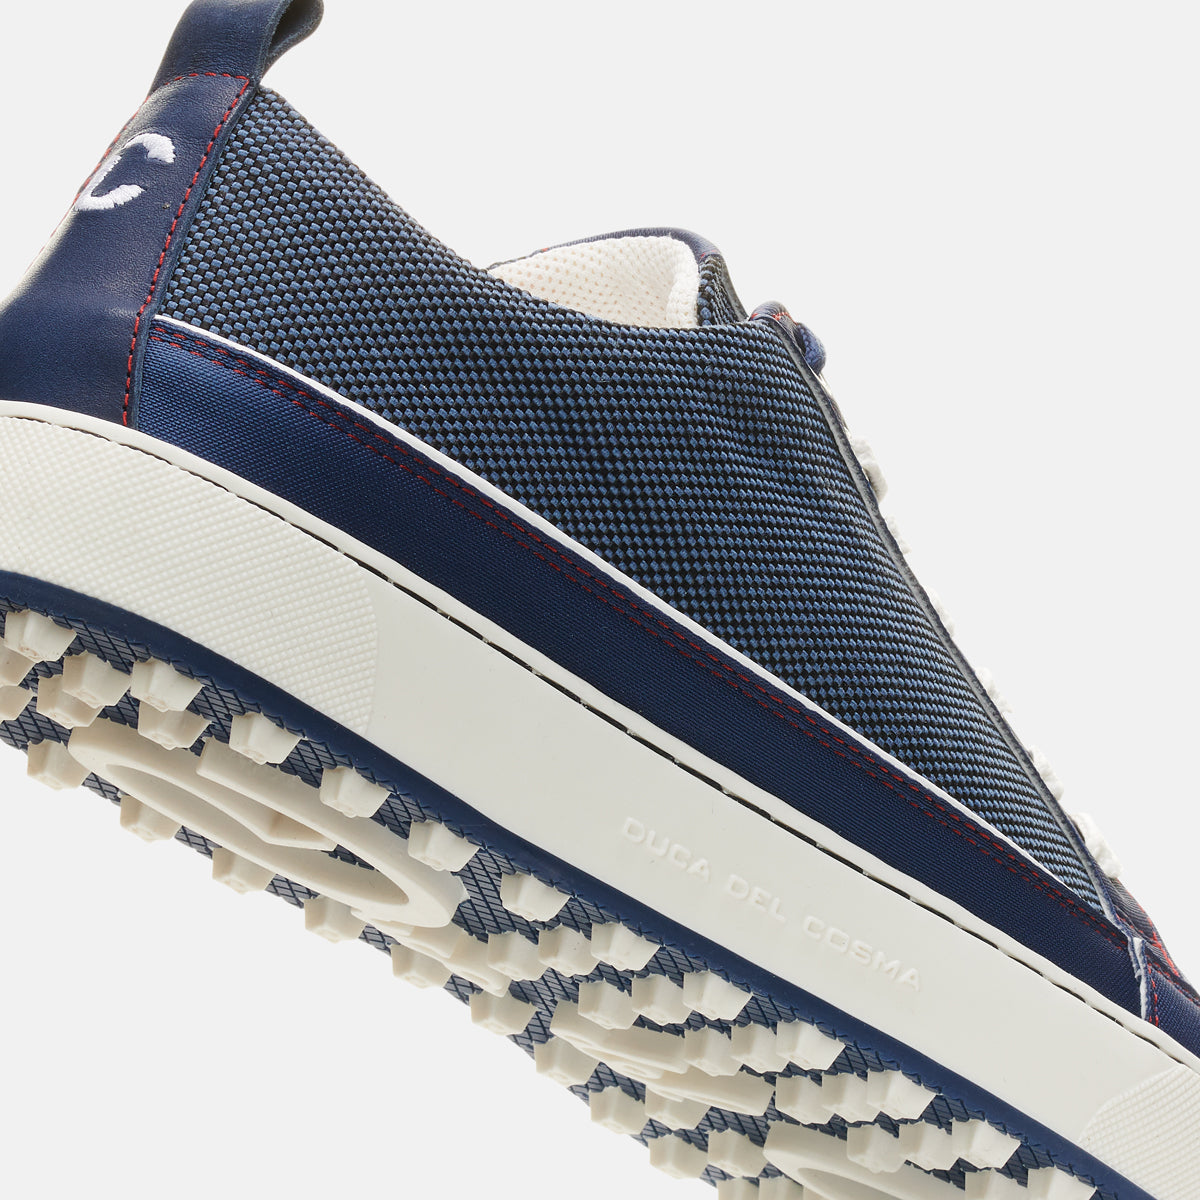 Laguna - Navy Men's Golf Shoes